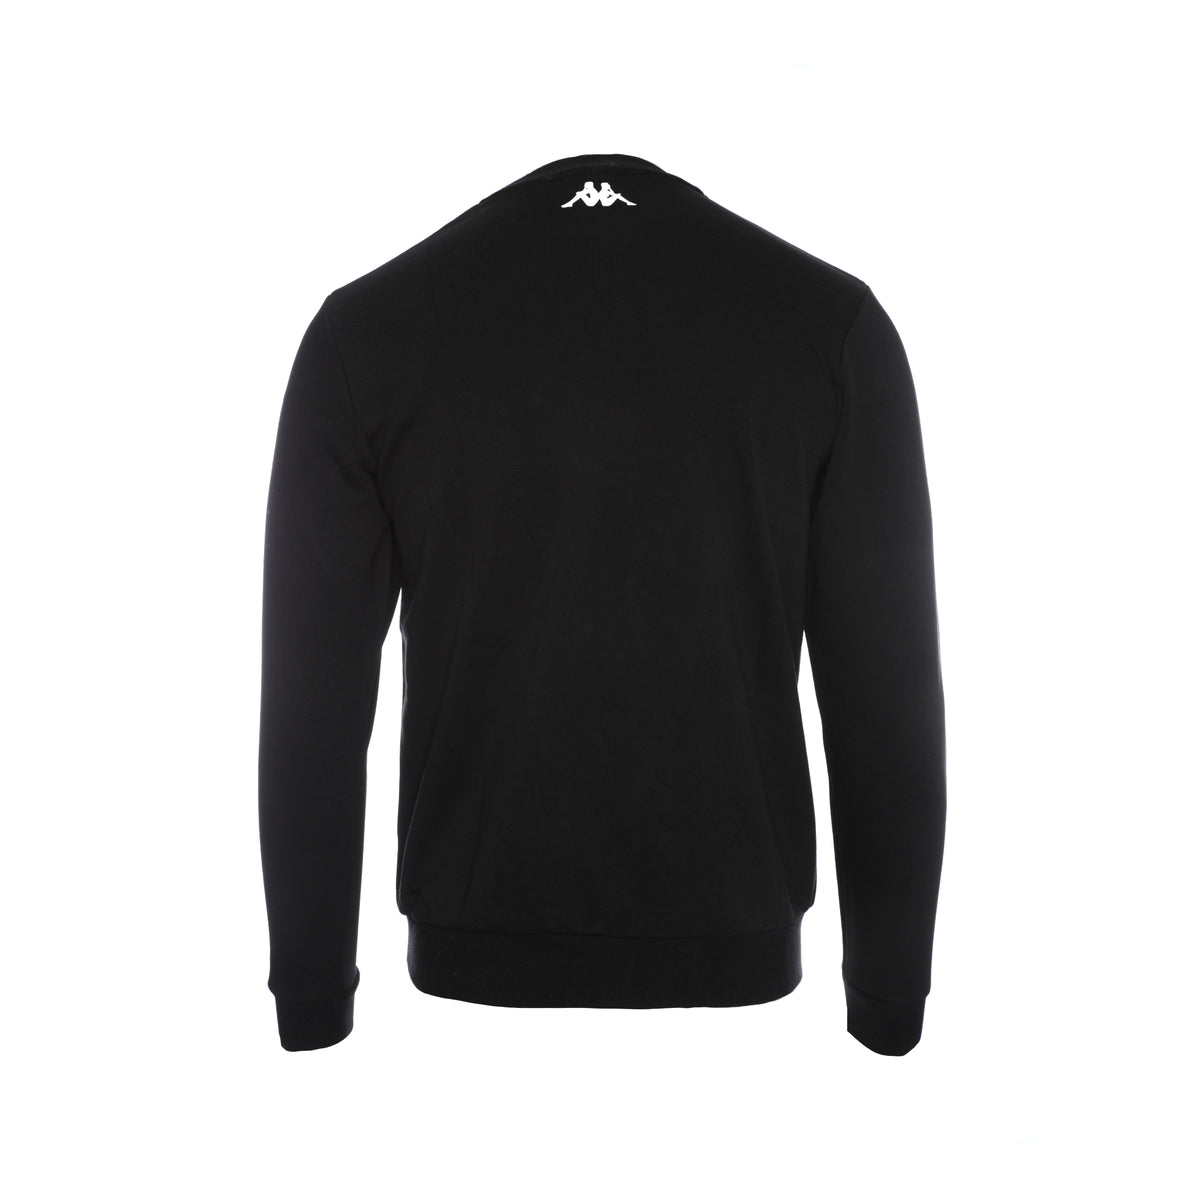 Kappa Authentic Pop Epaz Pullover Men's Sweaters Black